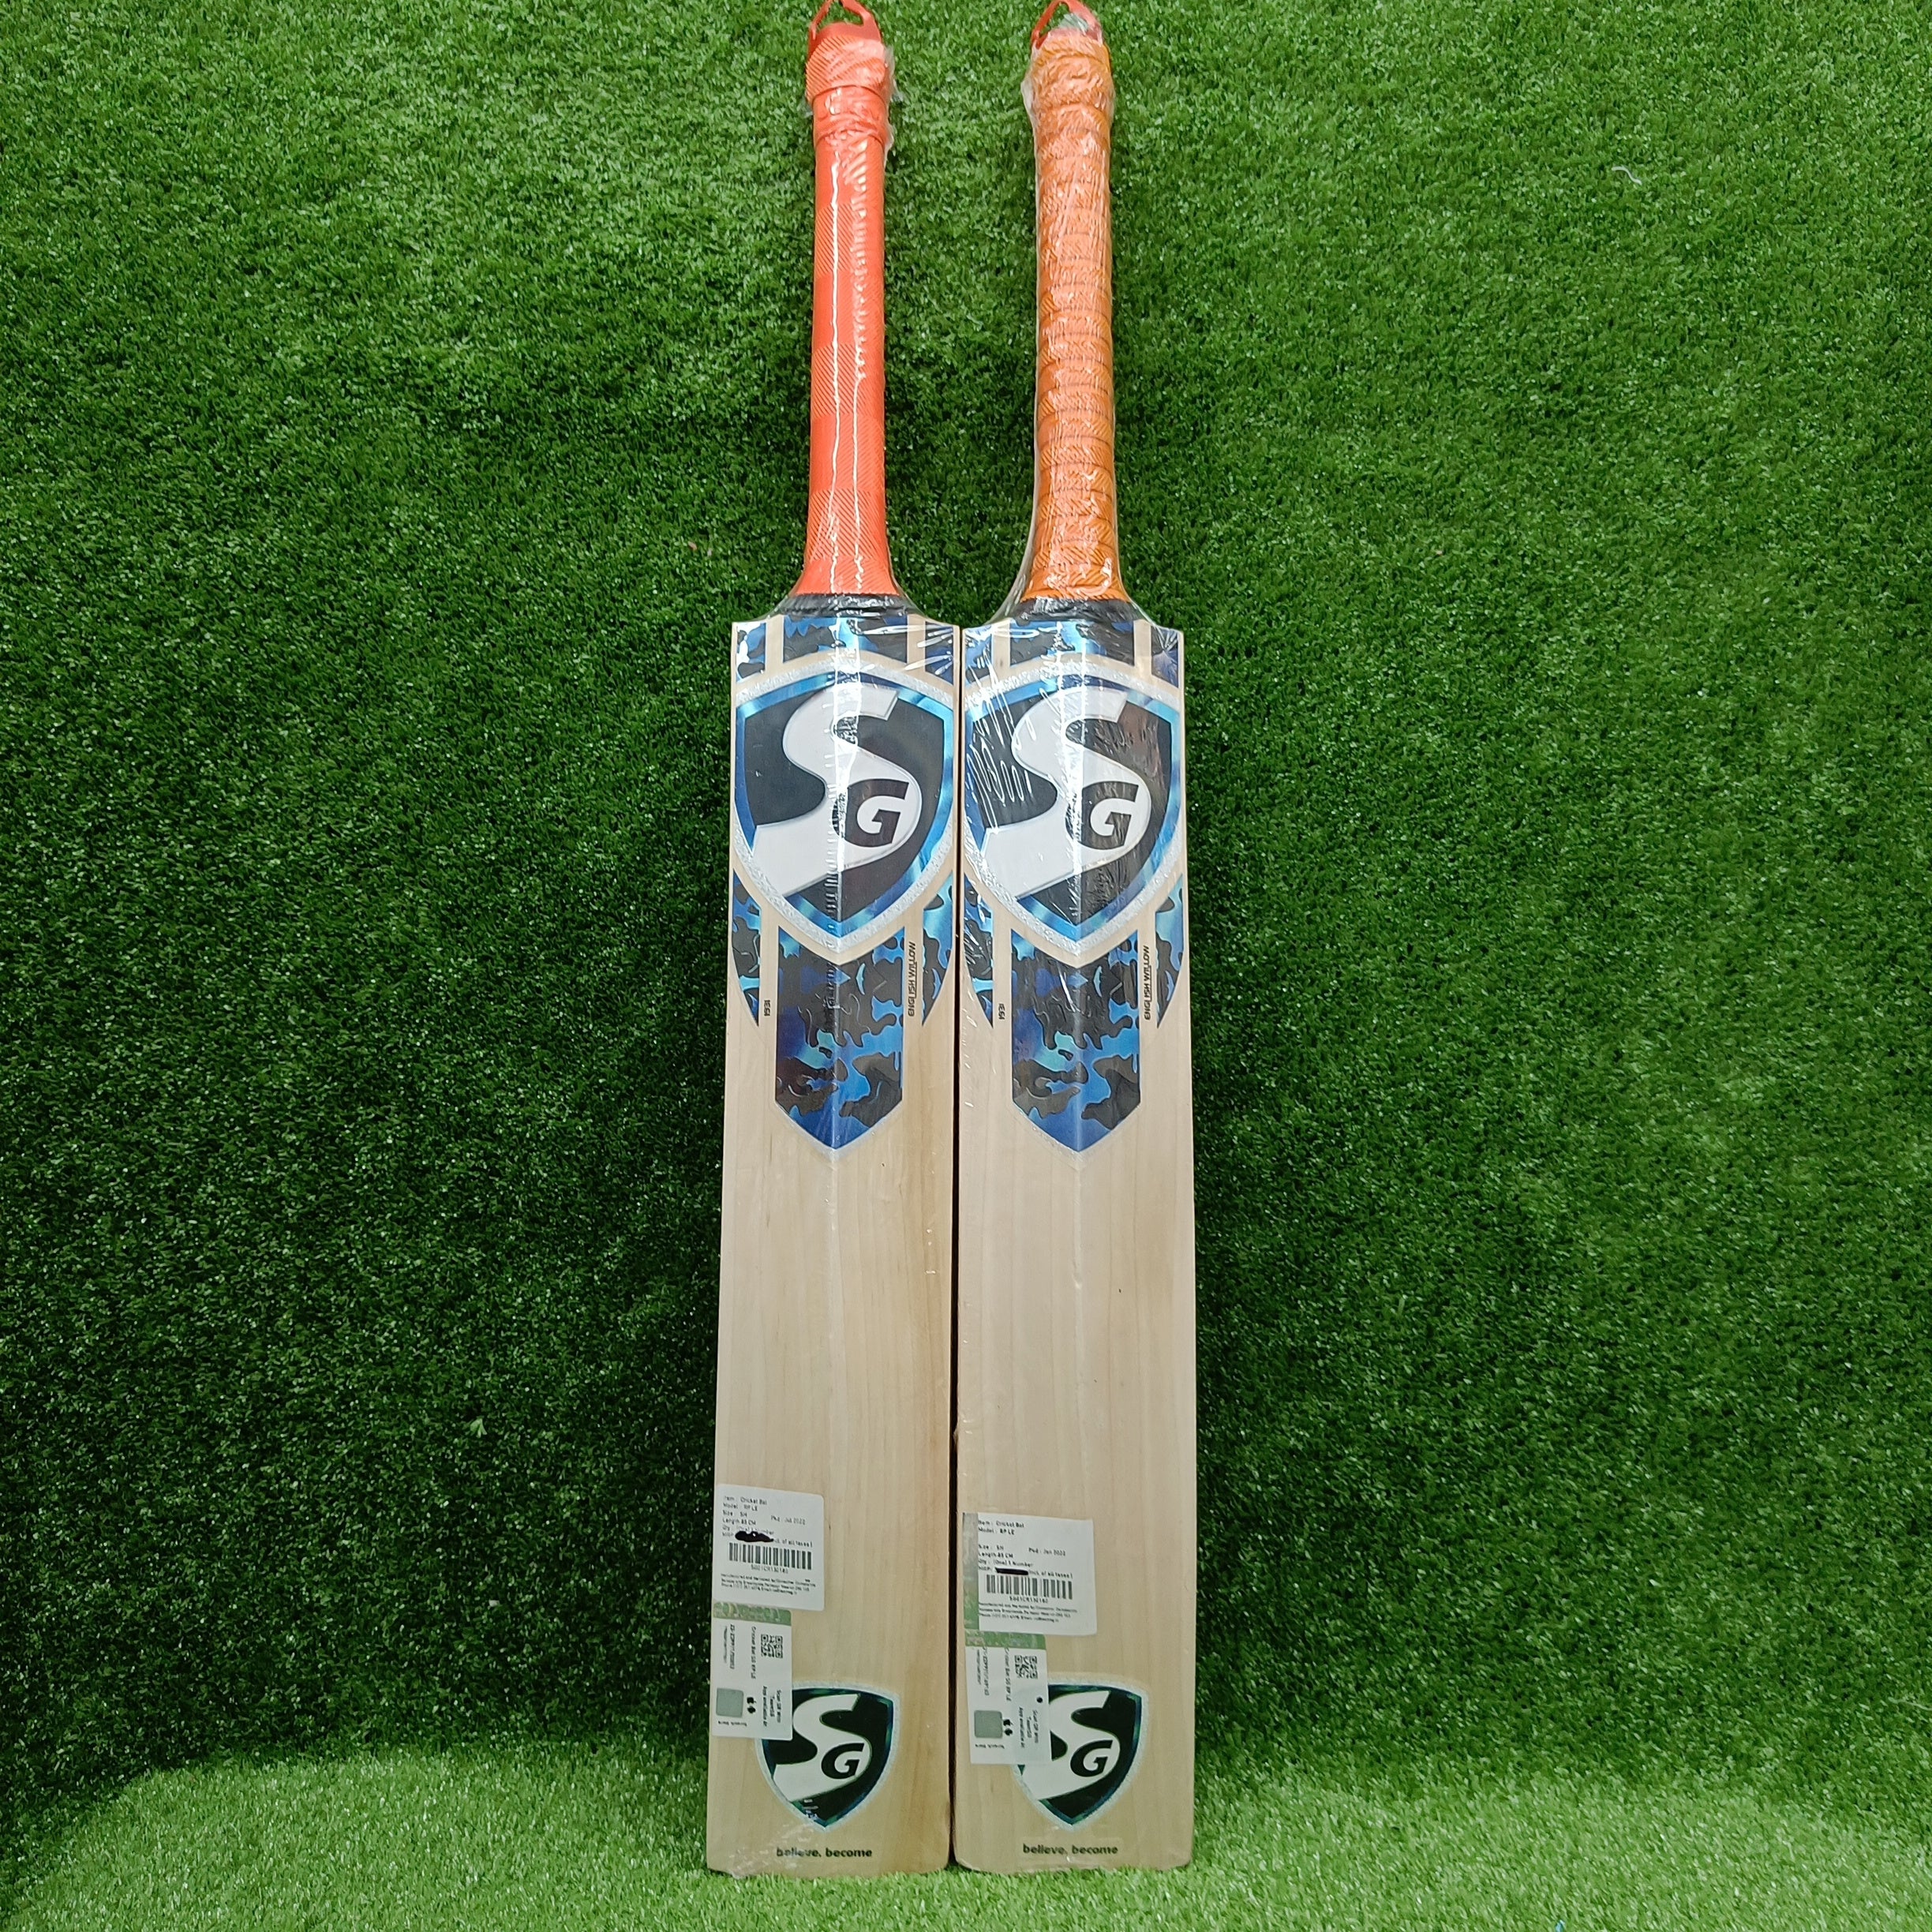 SG RP Limited Edition Cricket Bat (Rishabh Pant)